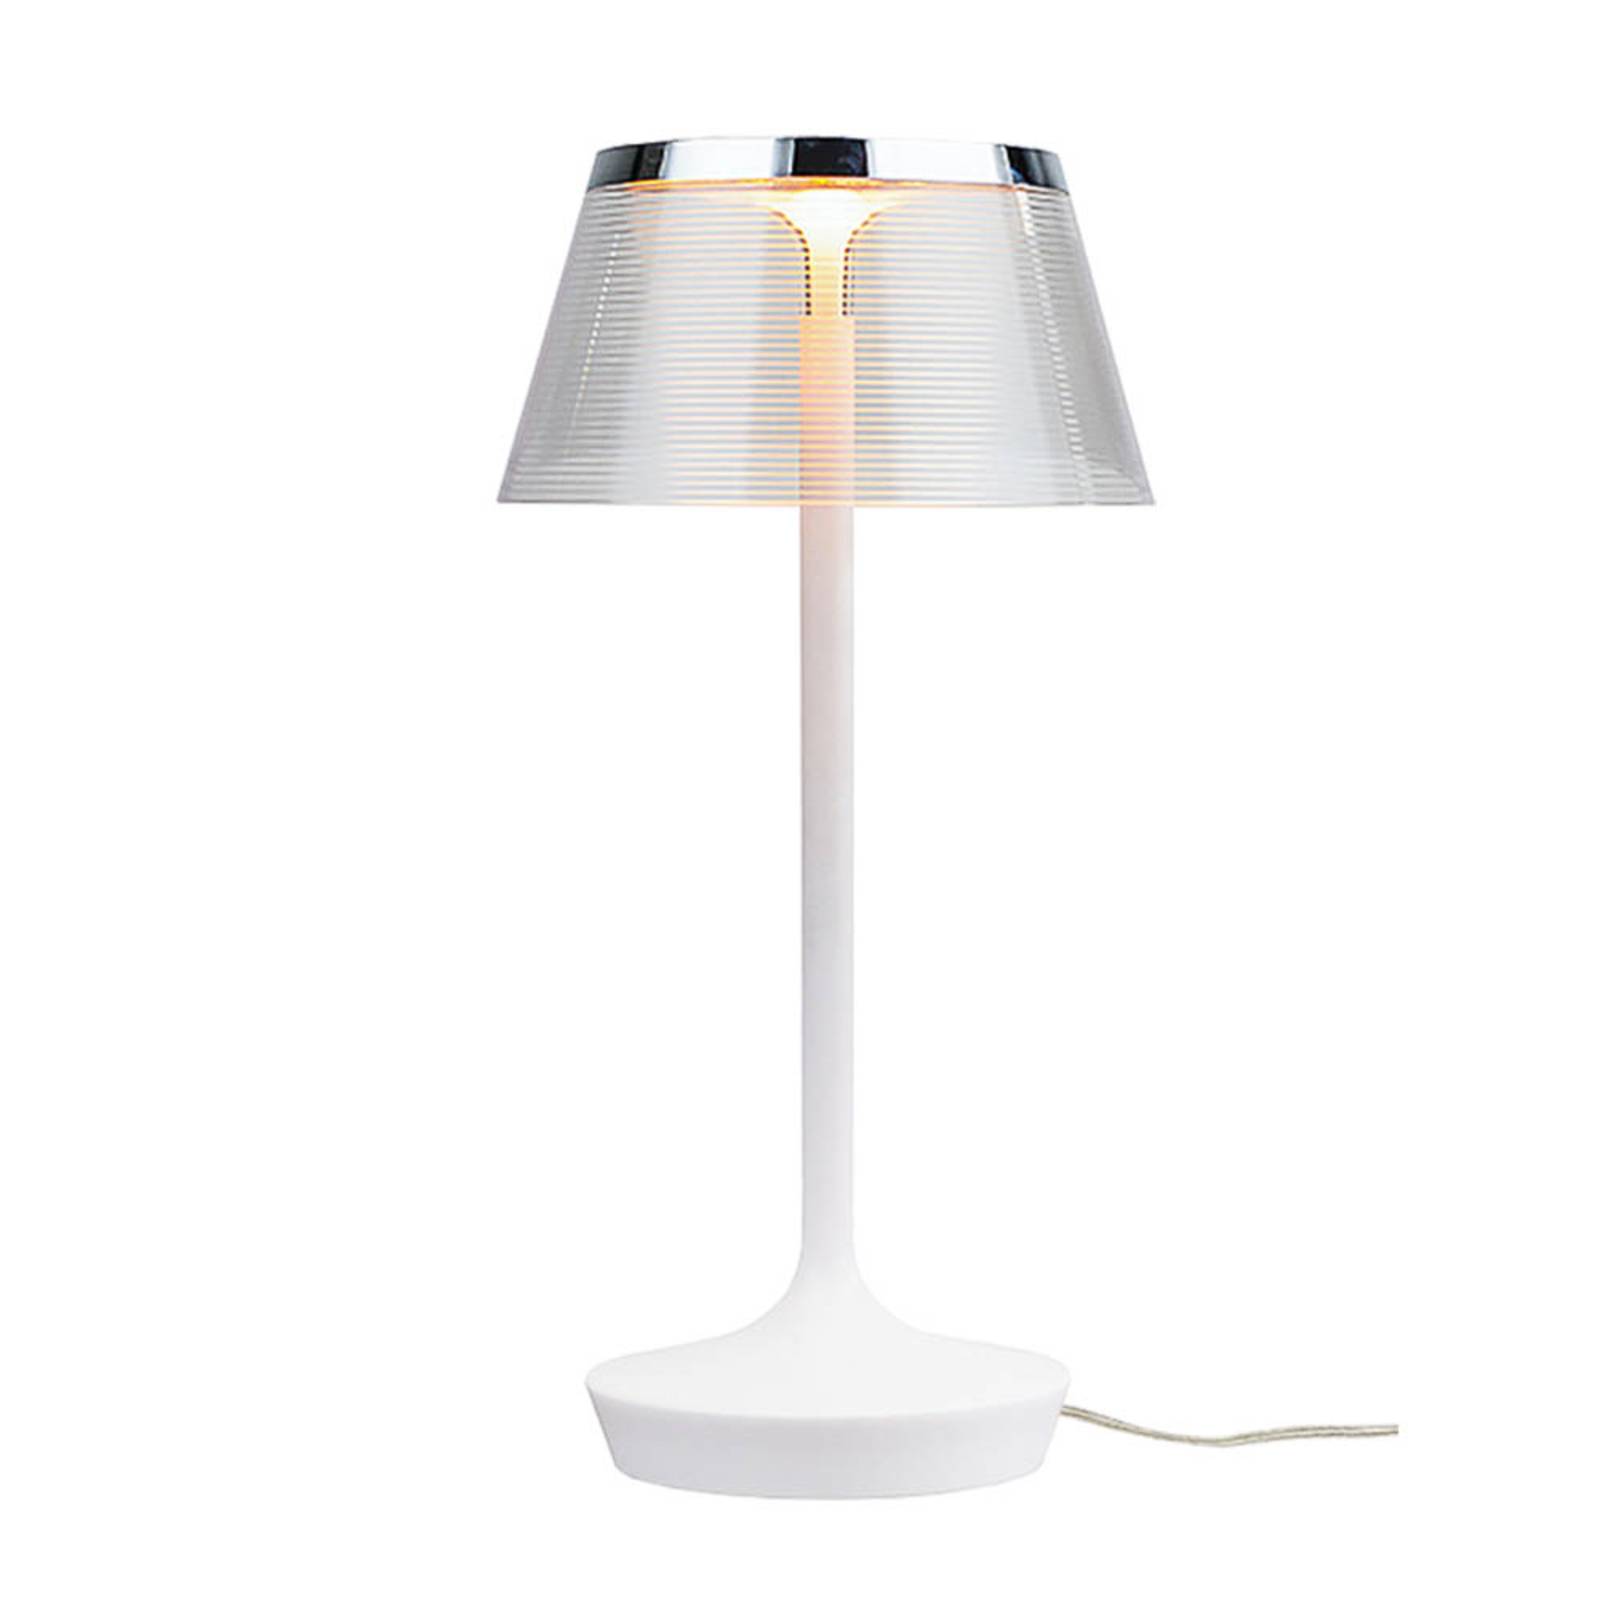 Aluminor La Petite Lampe LED-Tischlampe, weiß